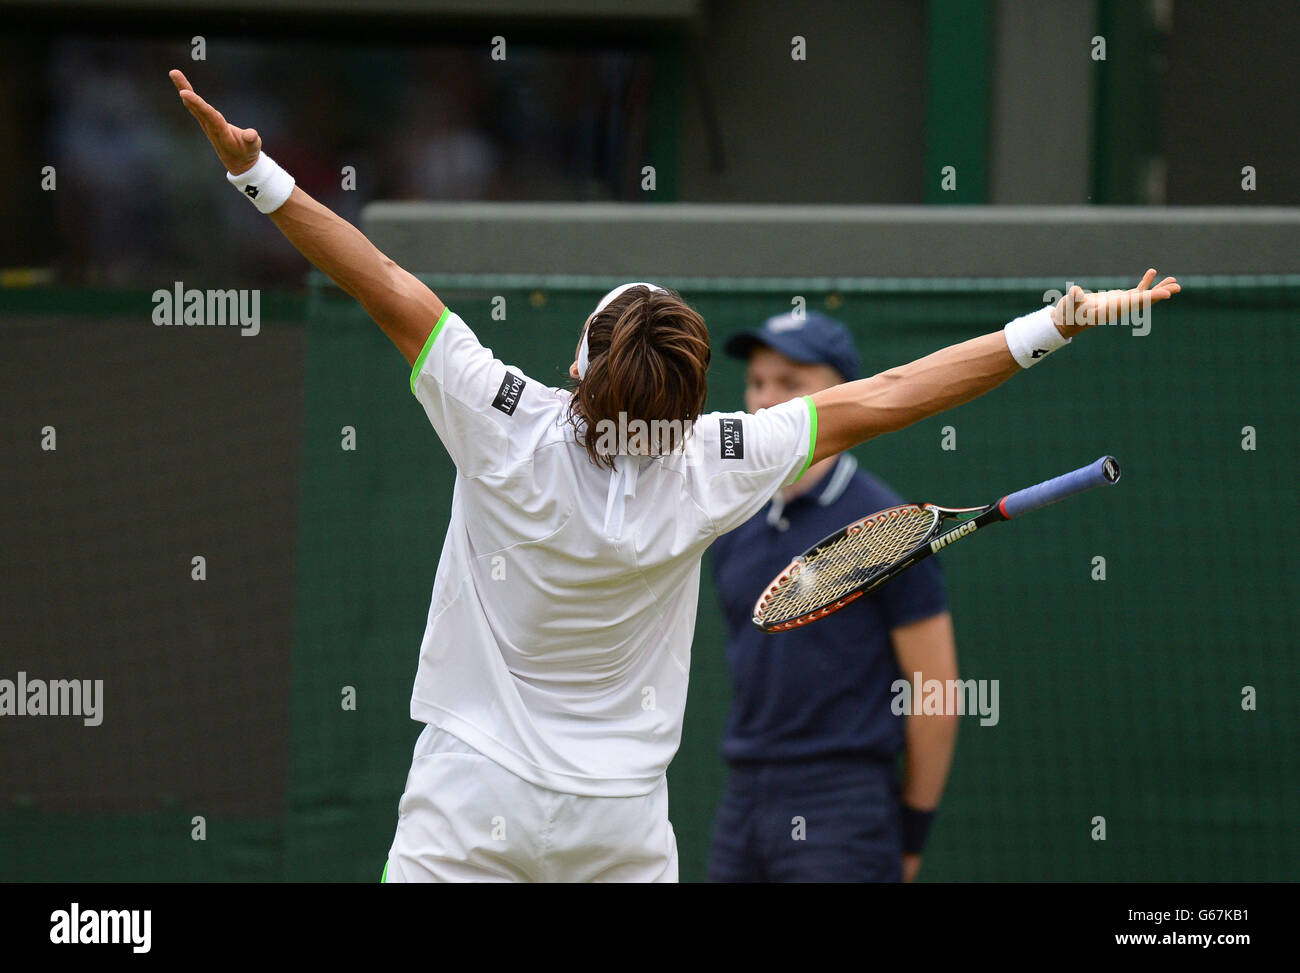 Der spanische David Ferrer feiert den Sieg des ukrainischen Alexandr Dolgopolov am sechsten Tag der Wimbledon-Meisterschaften im All England Lawn Tennis and Croquet Club in Wimbledon. Stockfoto